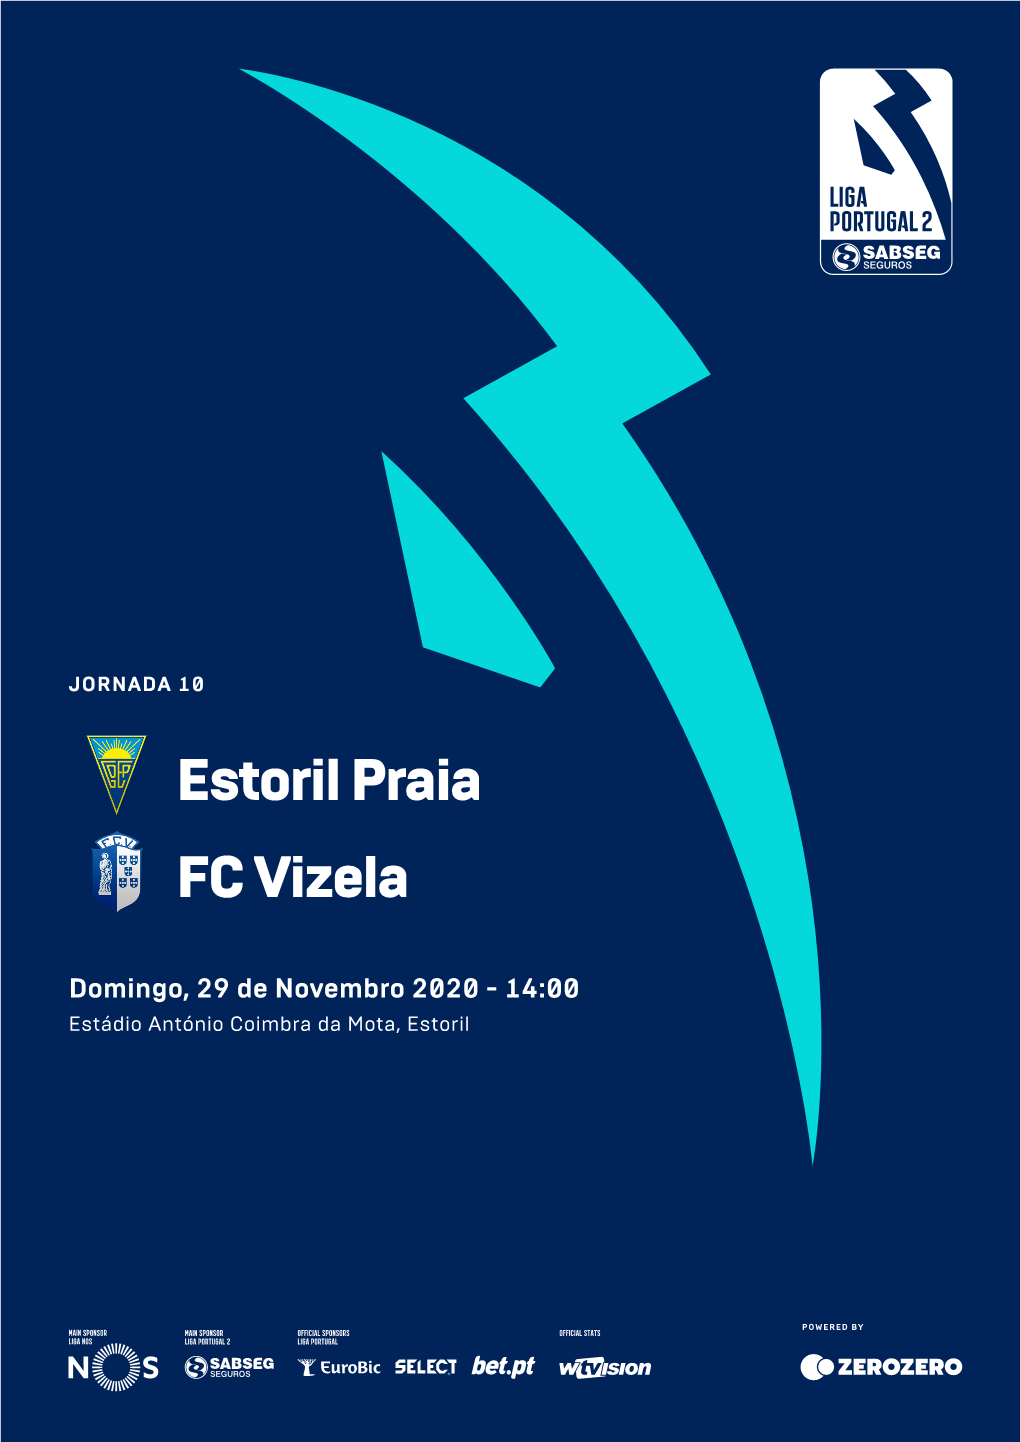 Estoril Praia FC Vizela